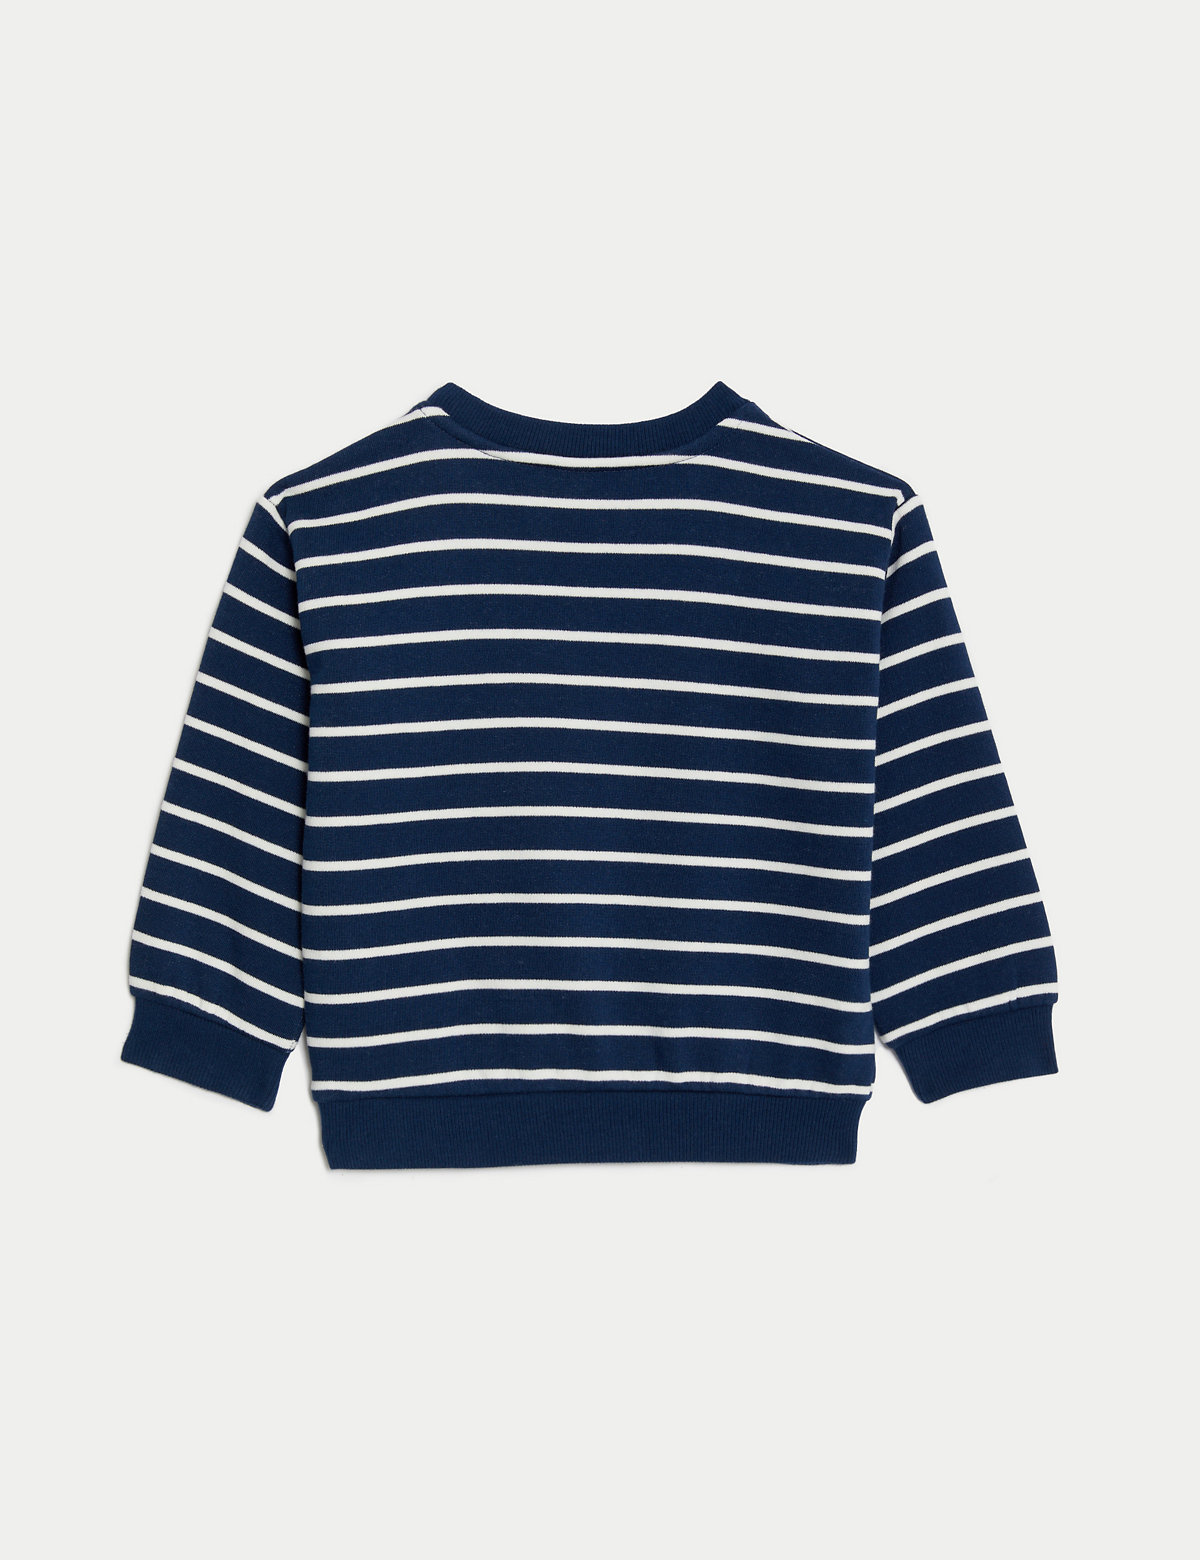 Cotton Rich Striped Dinosaur Sweatshirt (0-3 Yrs)